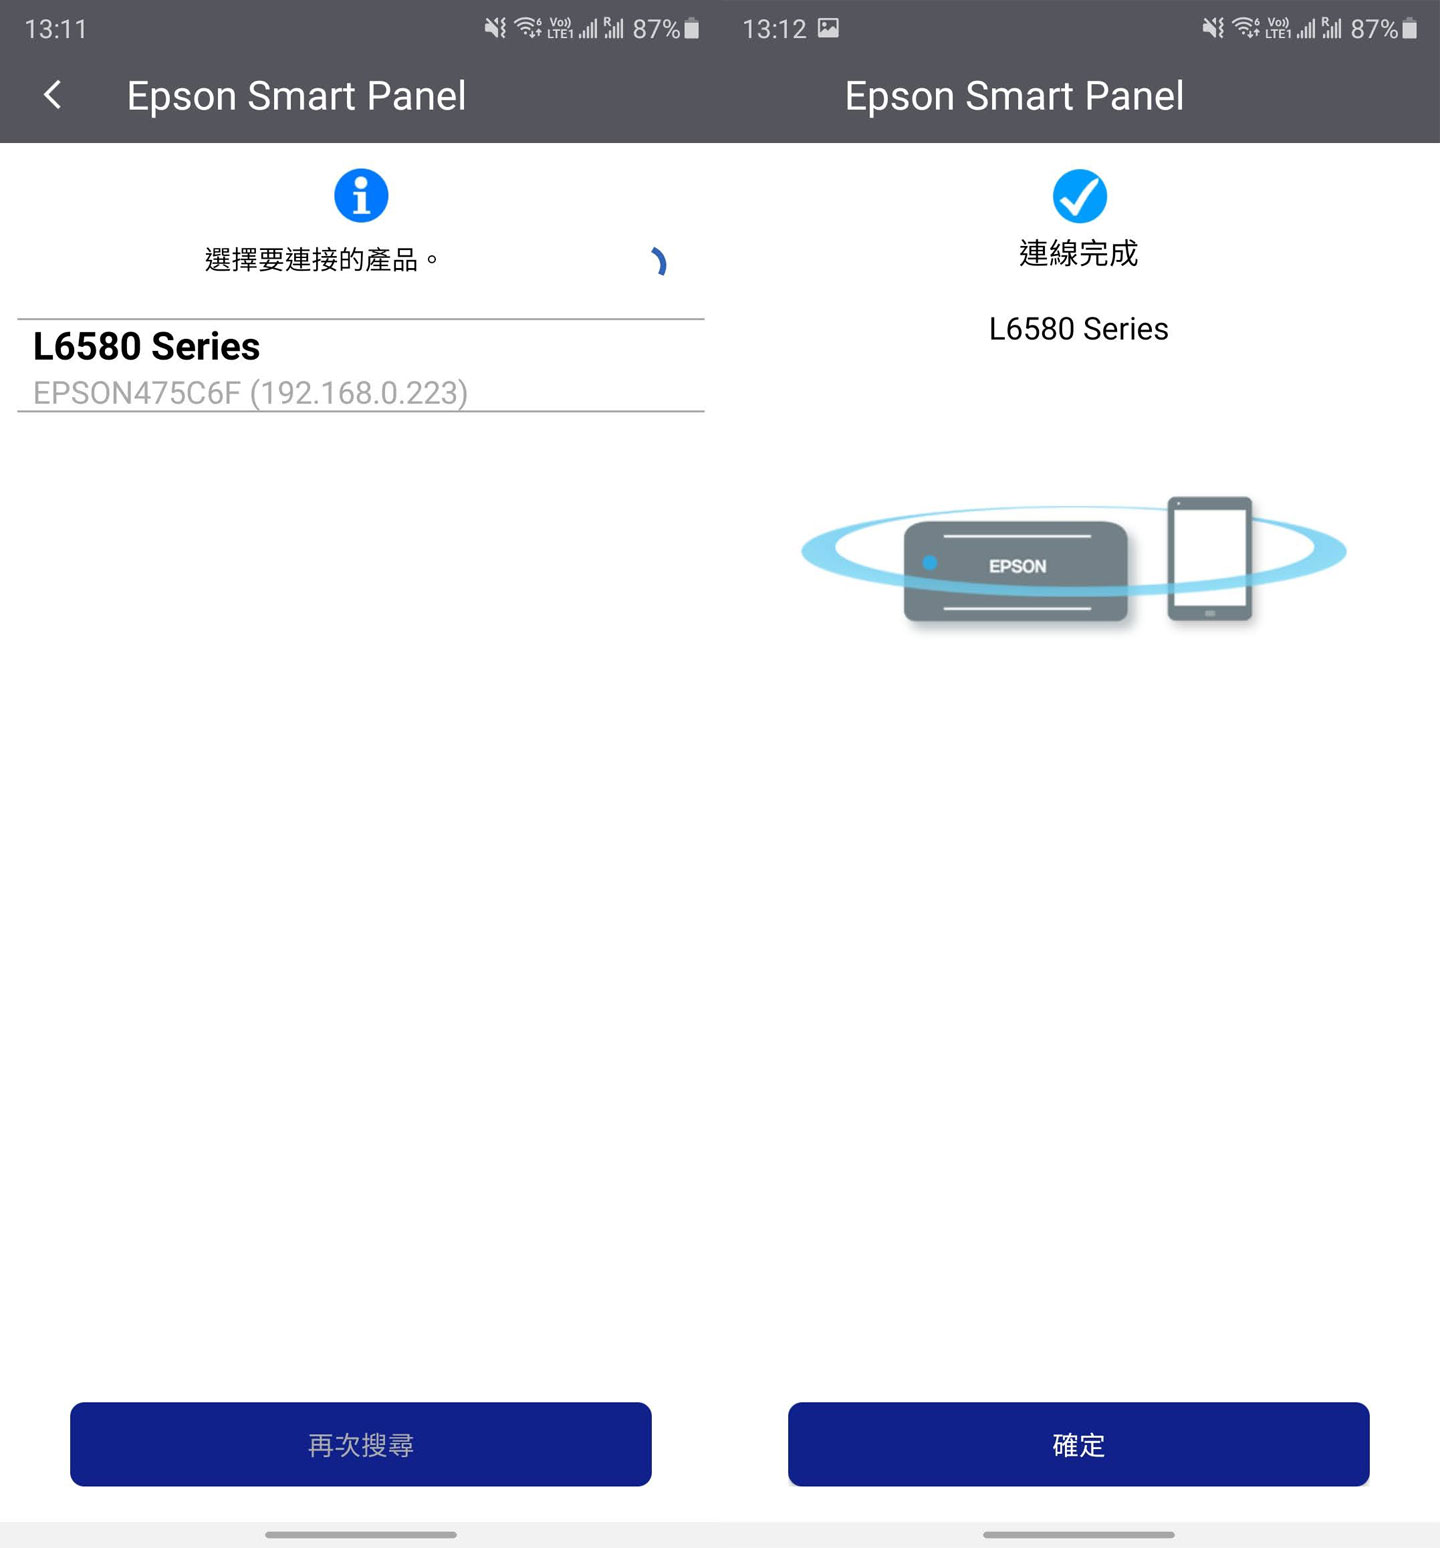 Epson 全新推出的手機端應用「Smart Panel」也能透過無線網路與 Epson L6580 完成連結。